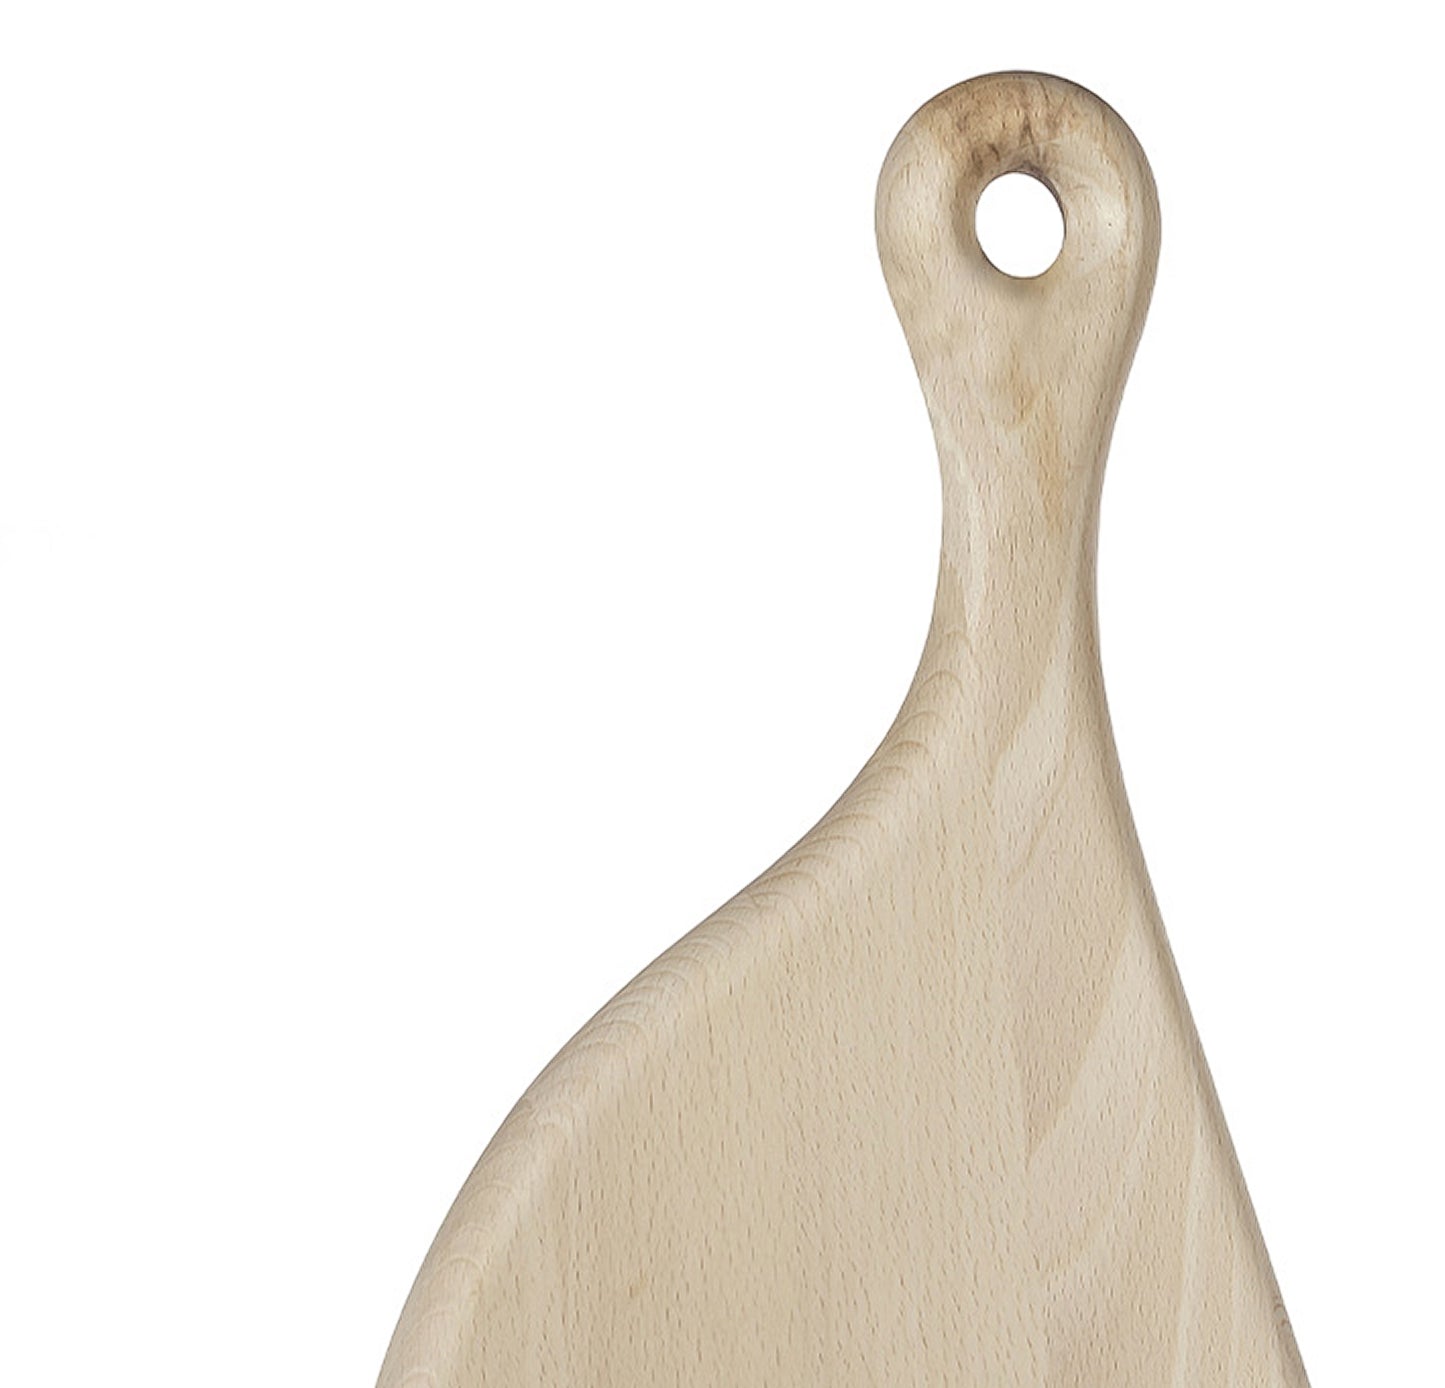 Legnoart - "Prosciutto" - Cutting Board in Natural Beech Wood